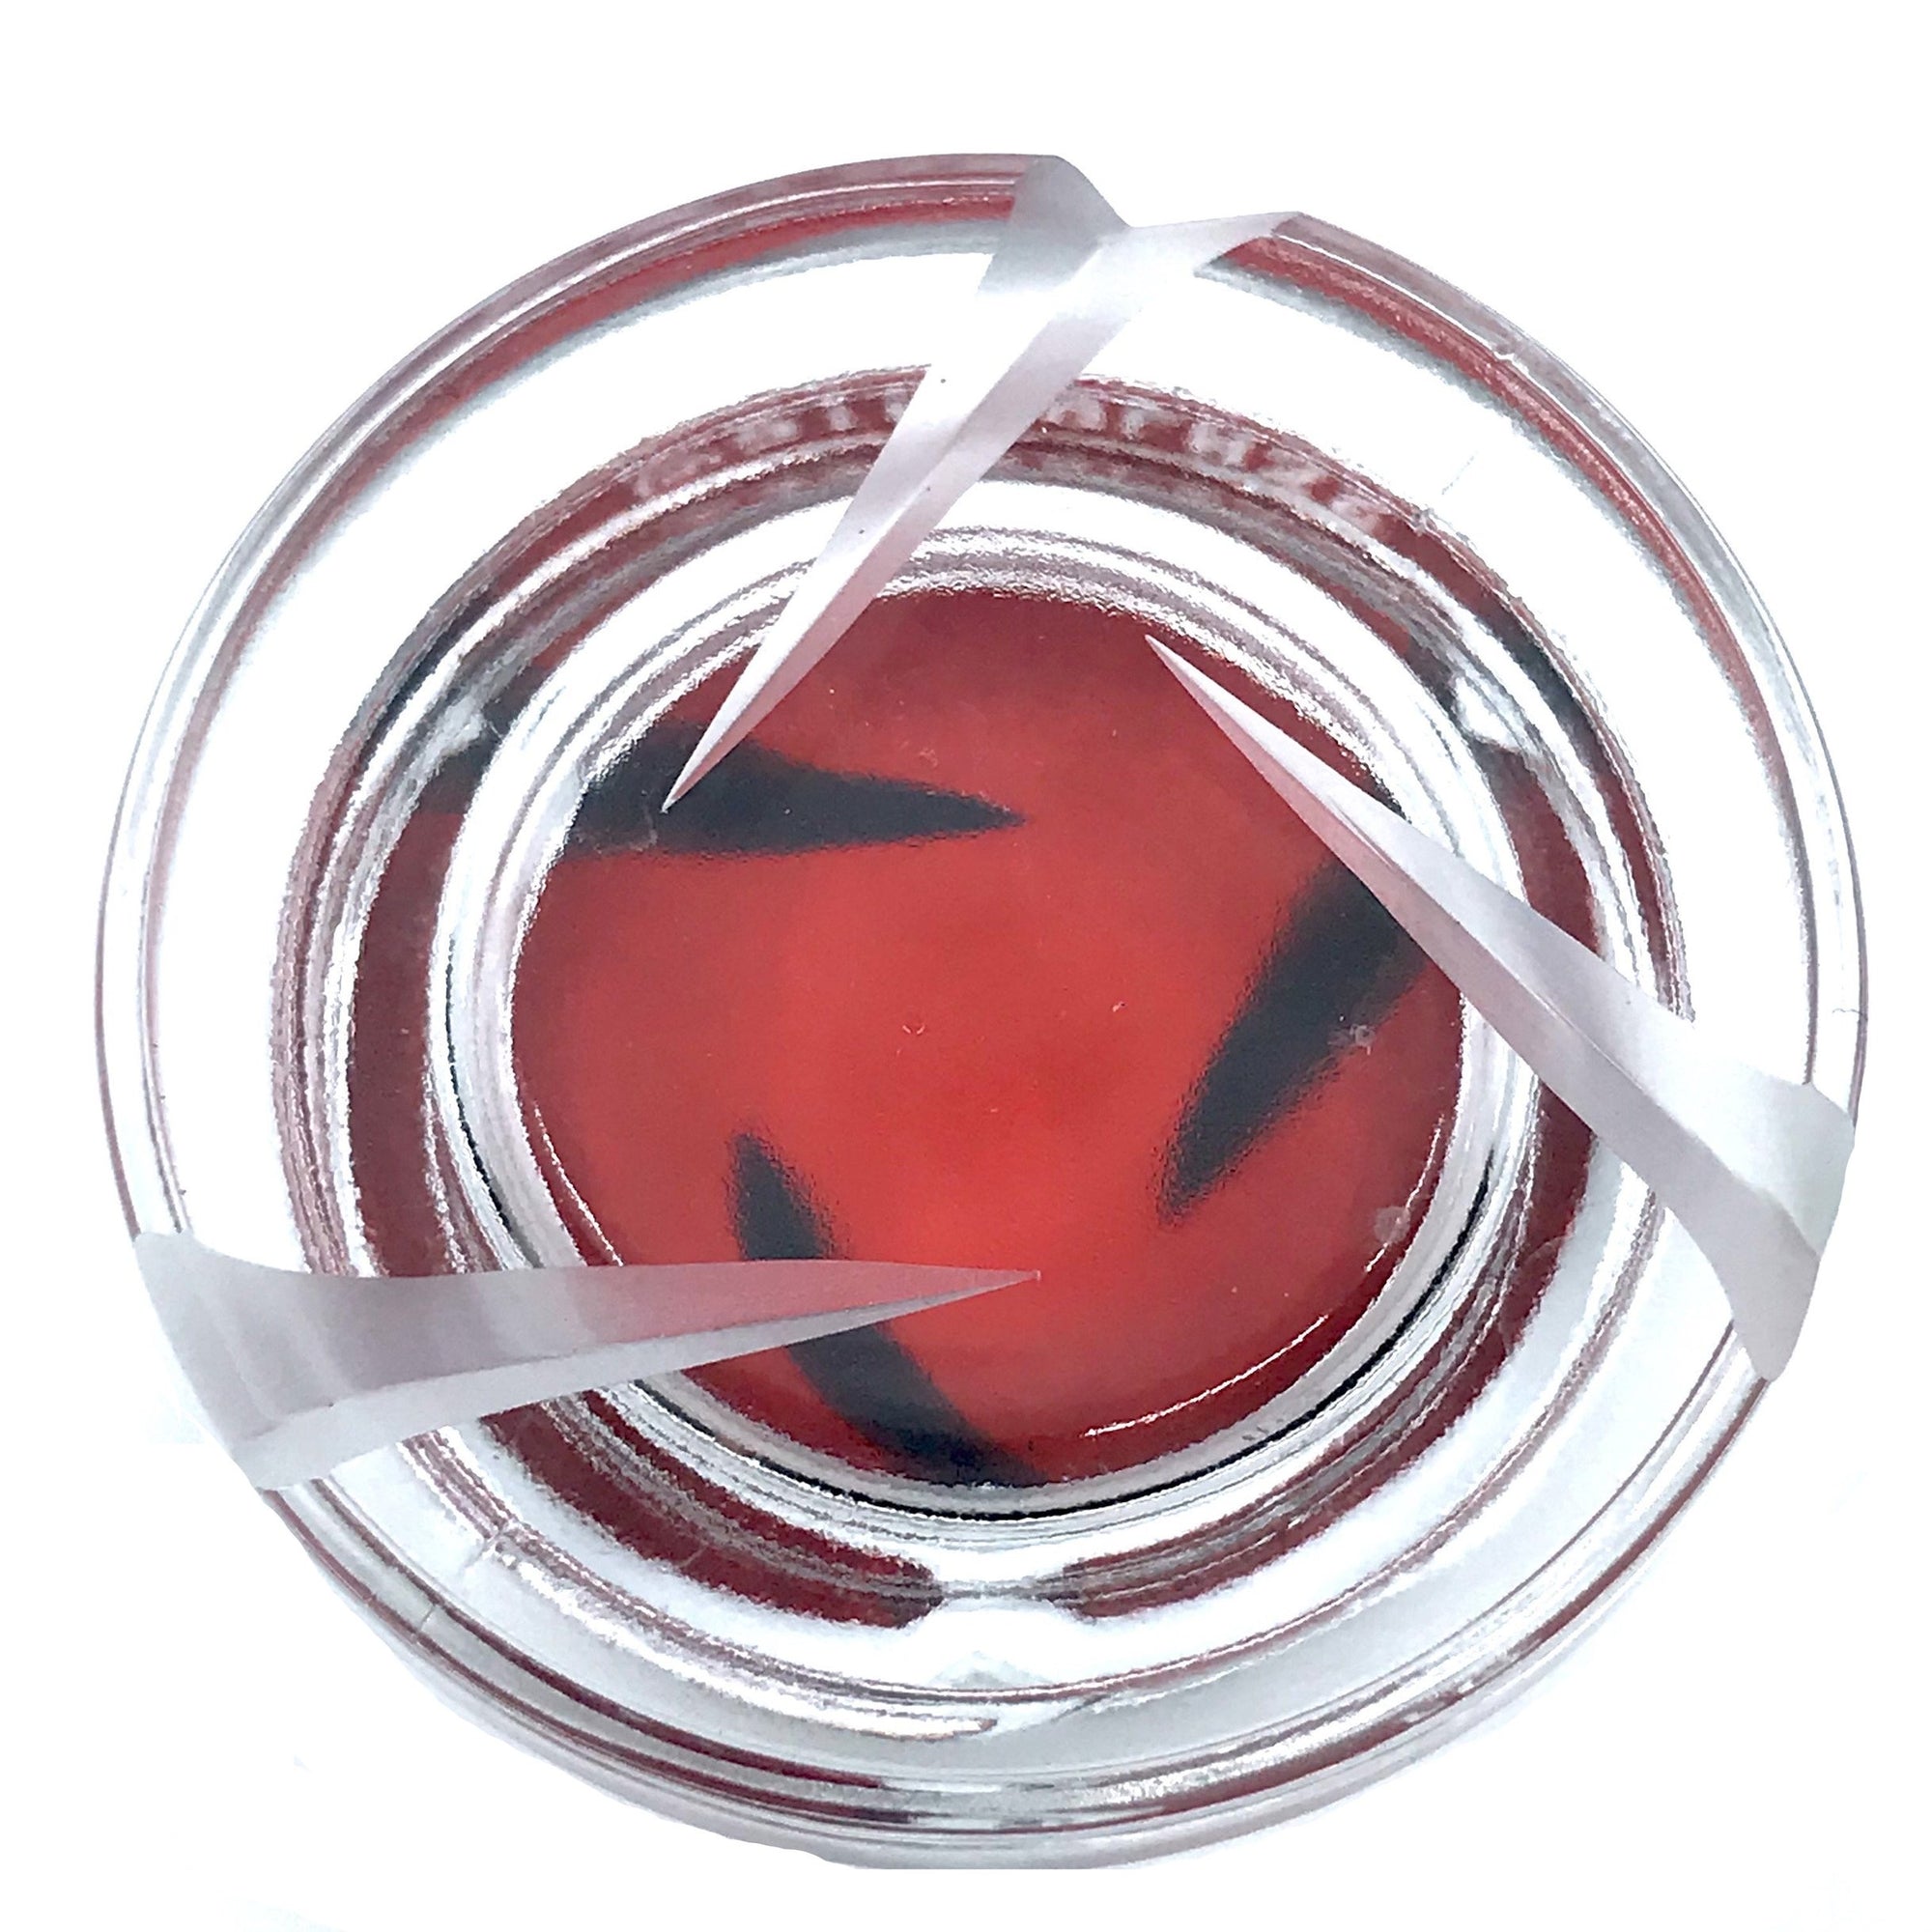 Str8 Glass Short Wider Spinner Jar Bottom View showing three cuts 